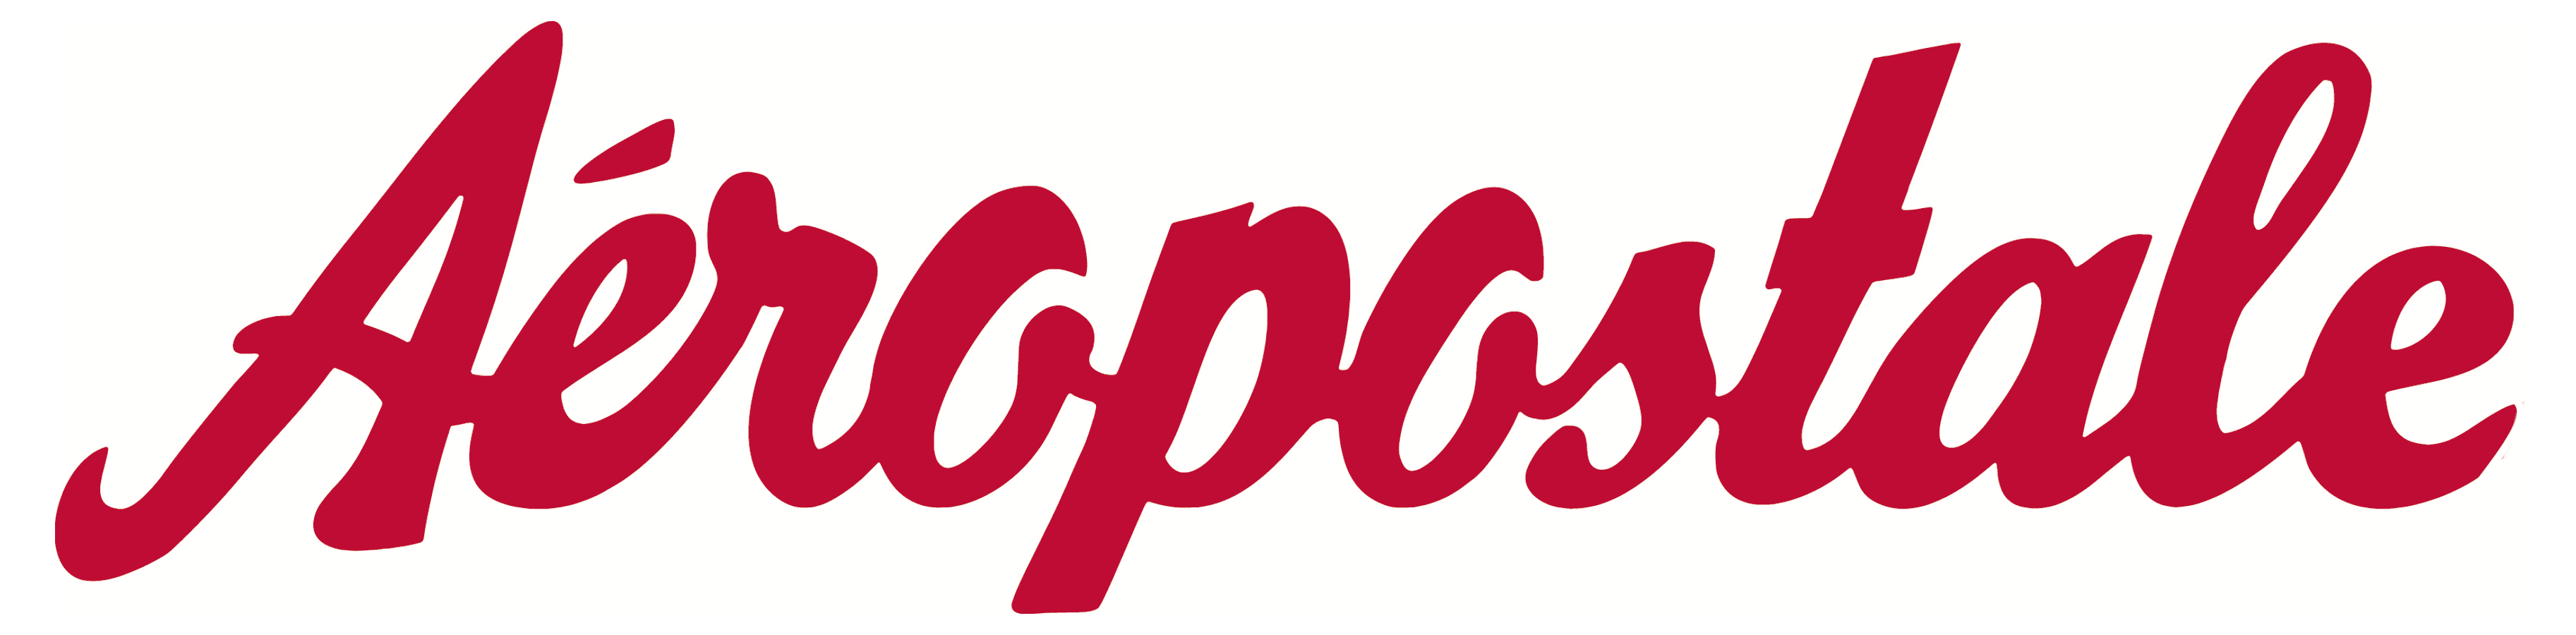 Aeropostale Logo - Aeropostale